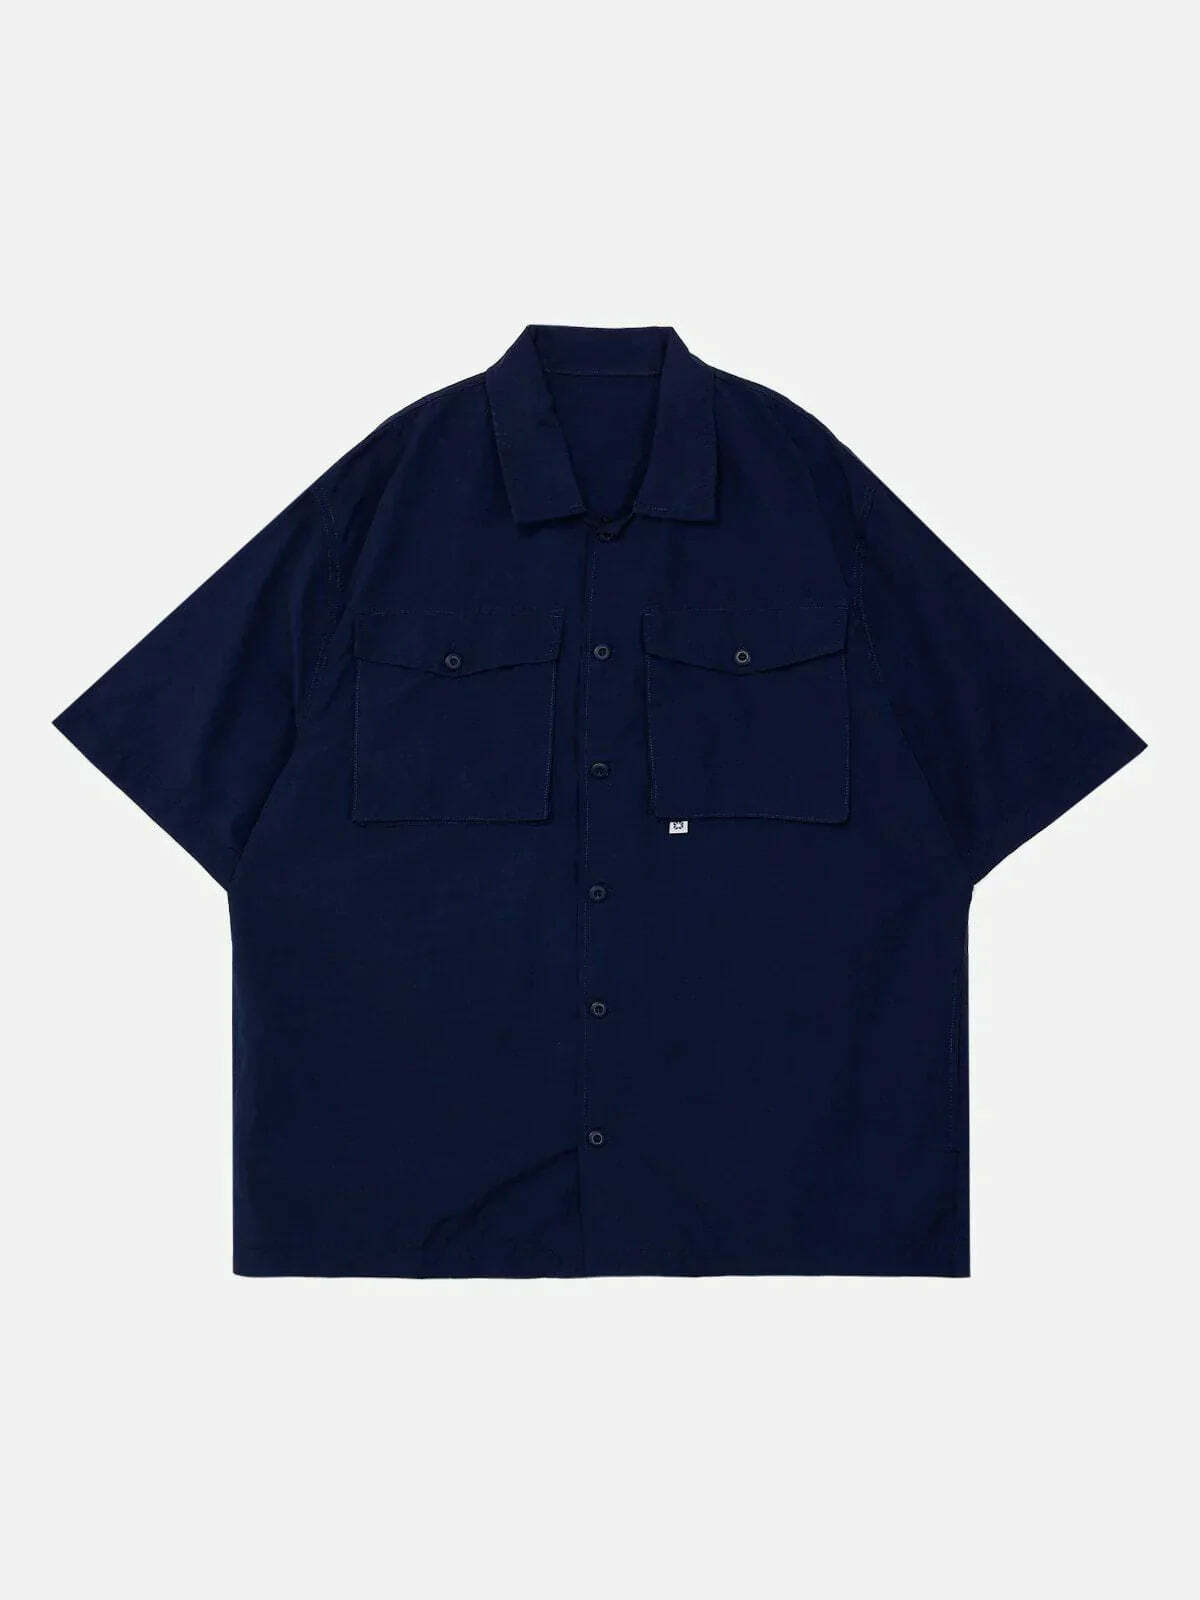 solid short sleeve shirt minimalist urban style 3970